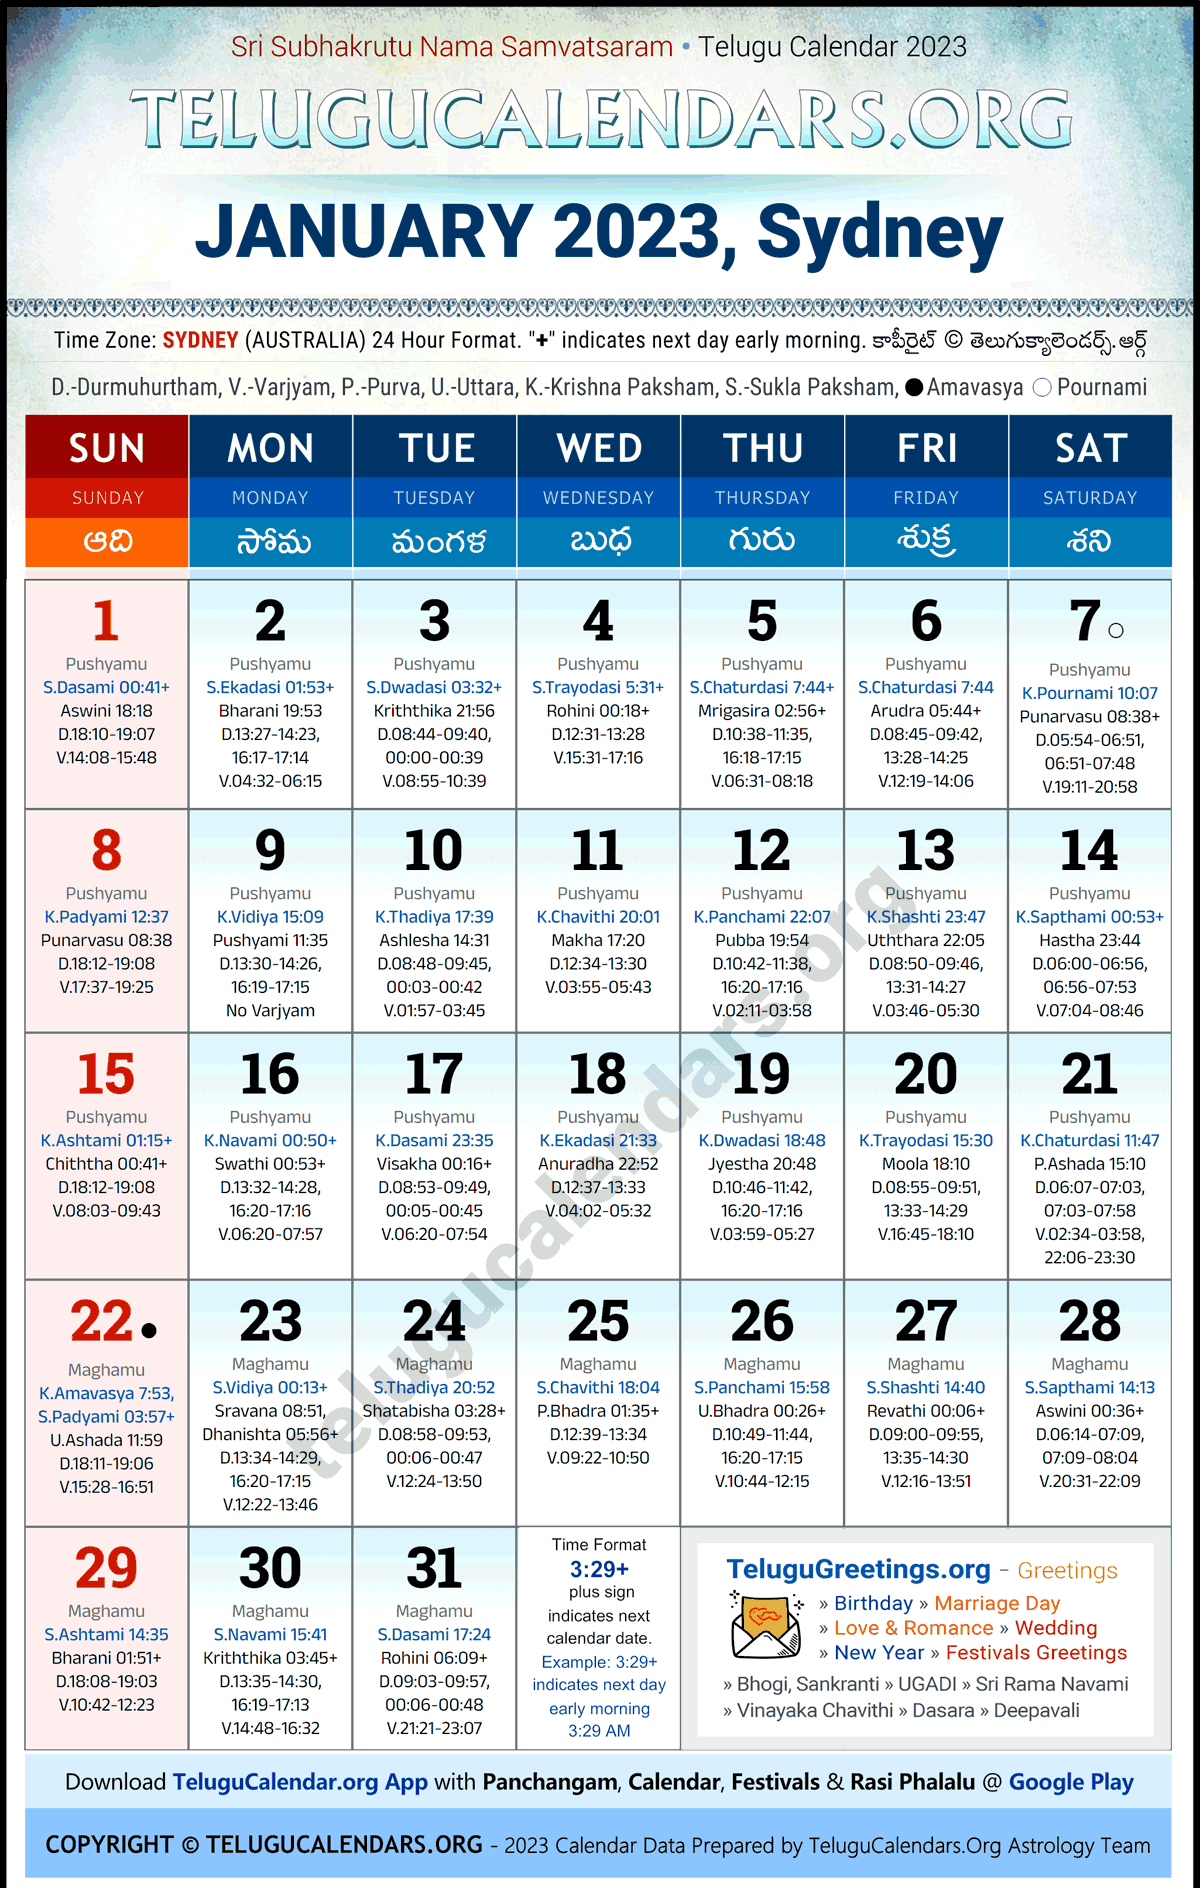 Telugu Calendar 2023 January Festivals for Sydney